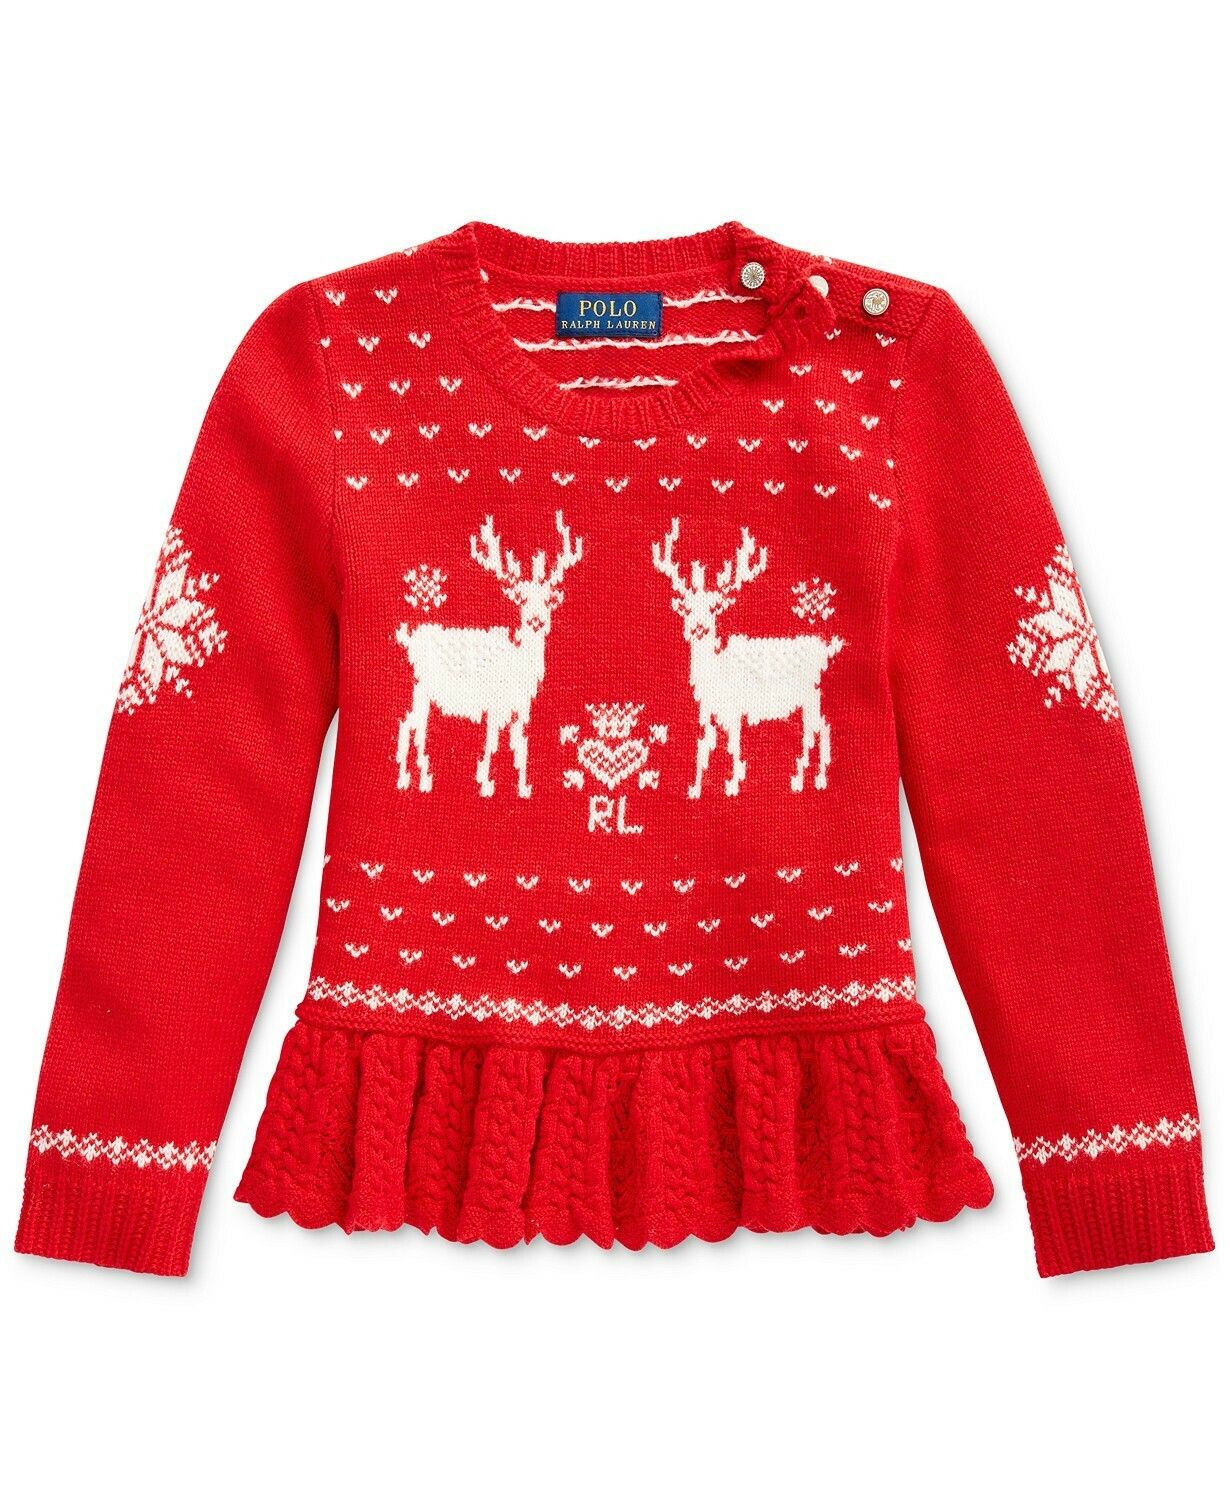 Polo Ralph Lauren Toddler Girls Intarsia-Knit Peplum Sweater